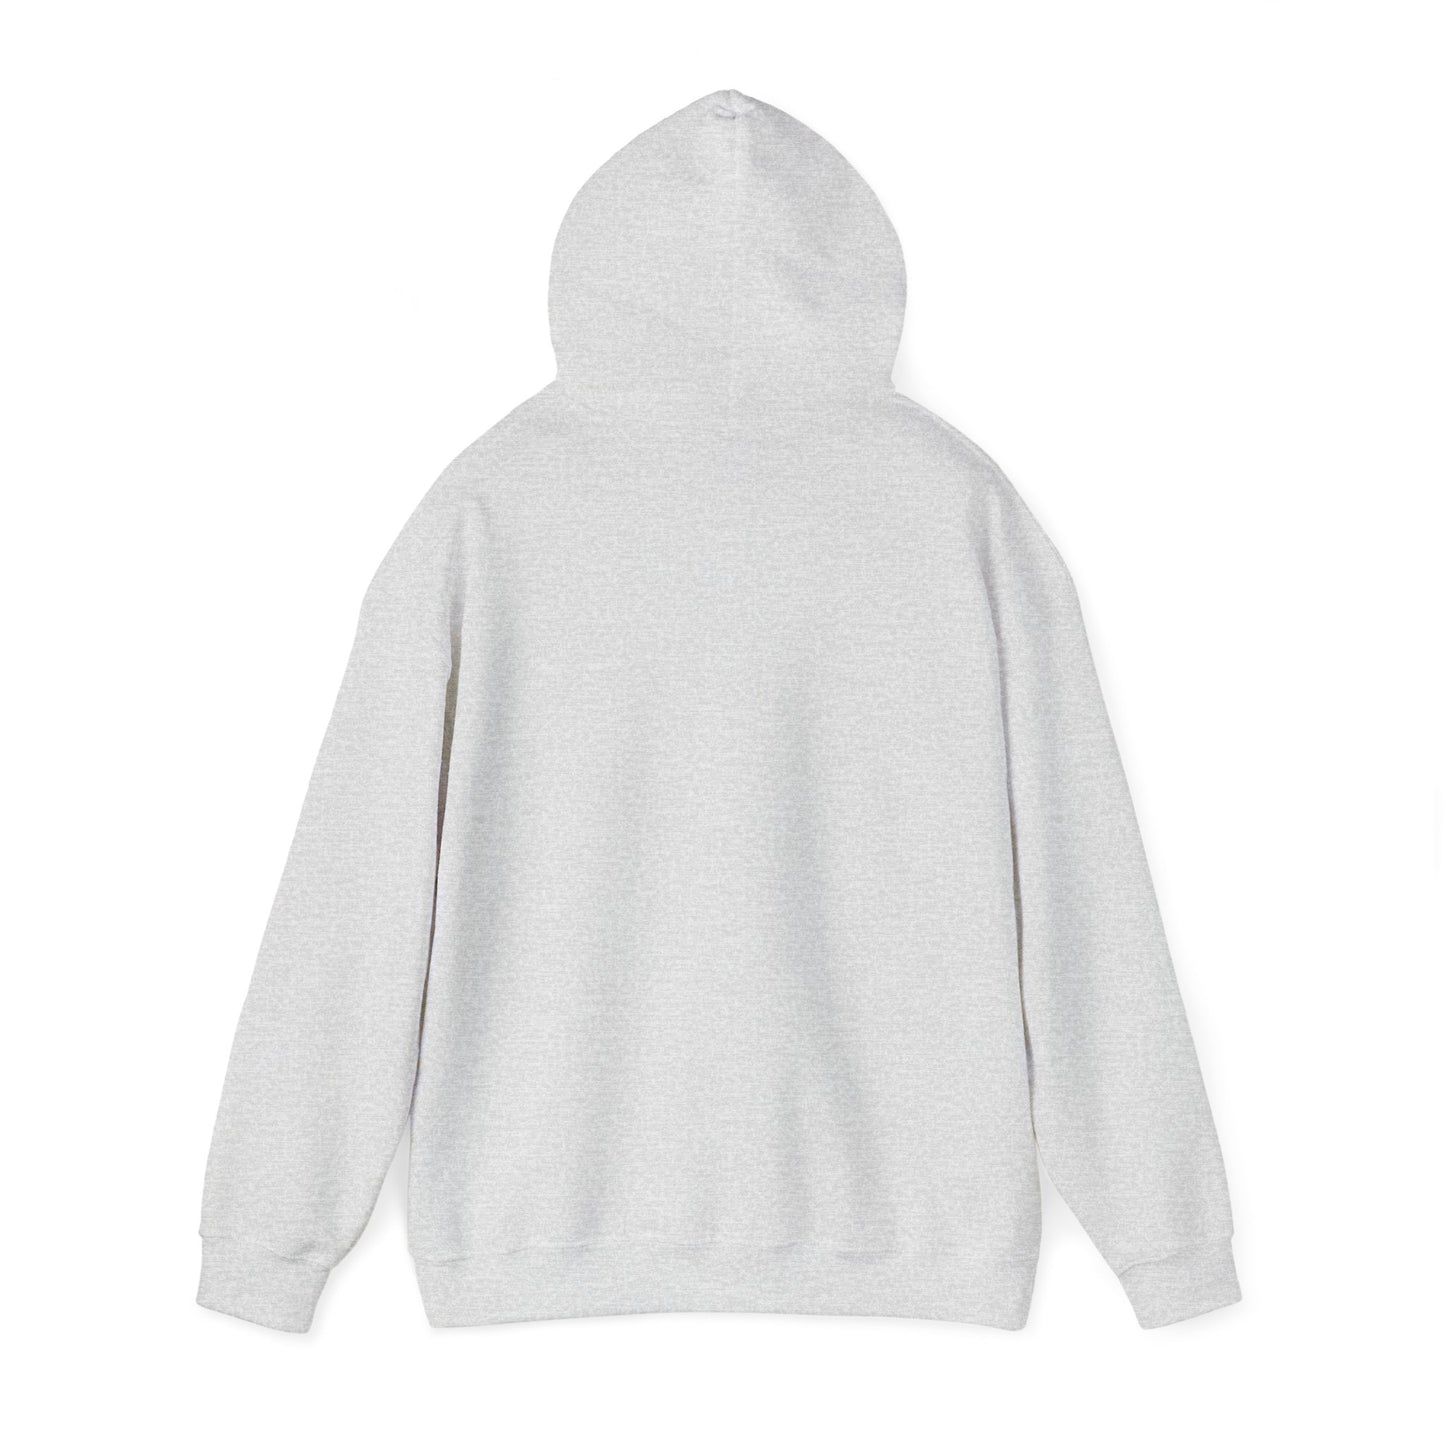 Buy Me Weed Unisex Hooded Sweatshirt